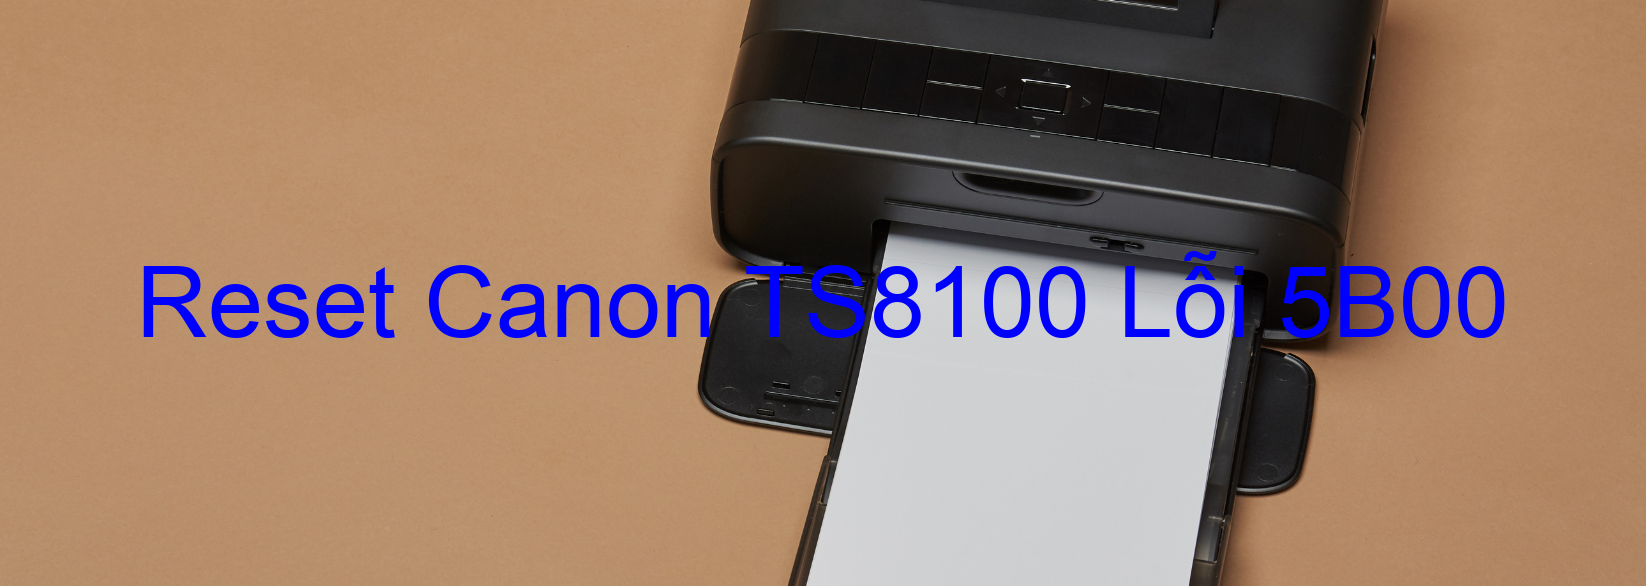 Reset Canon TS8100 Lỗi 5B00